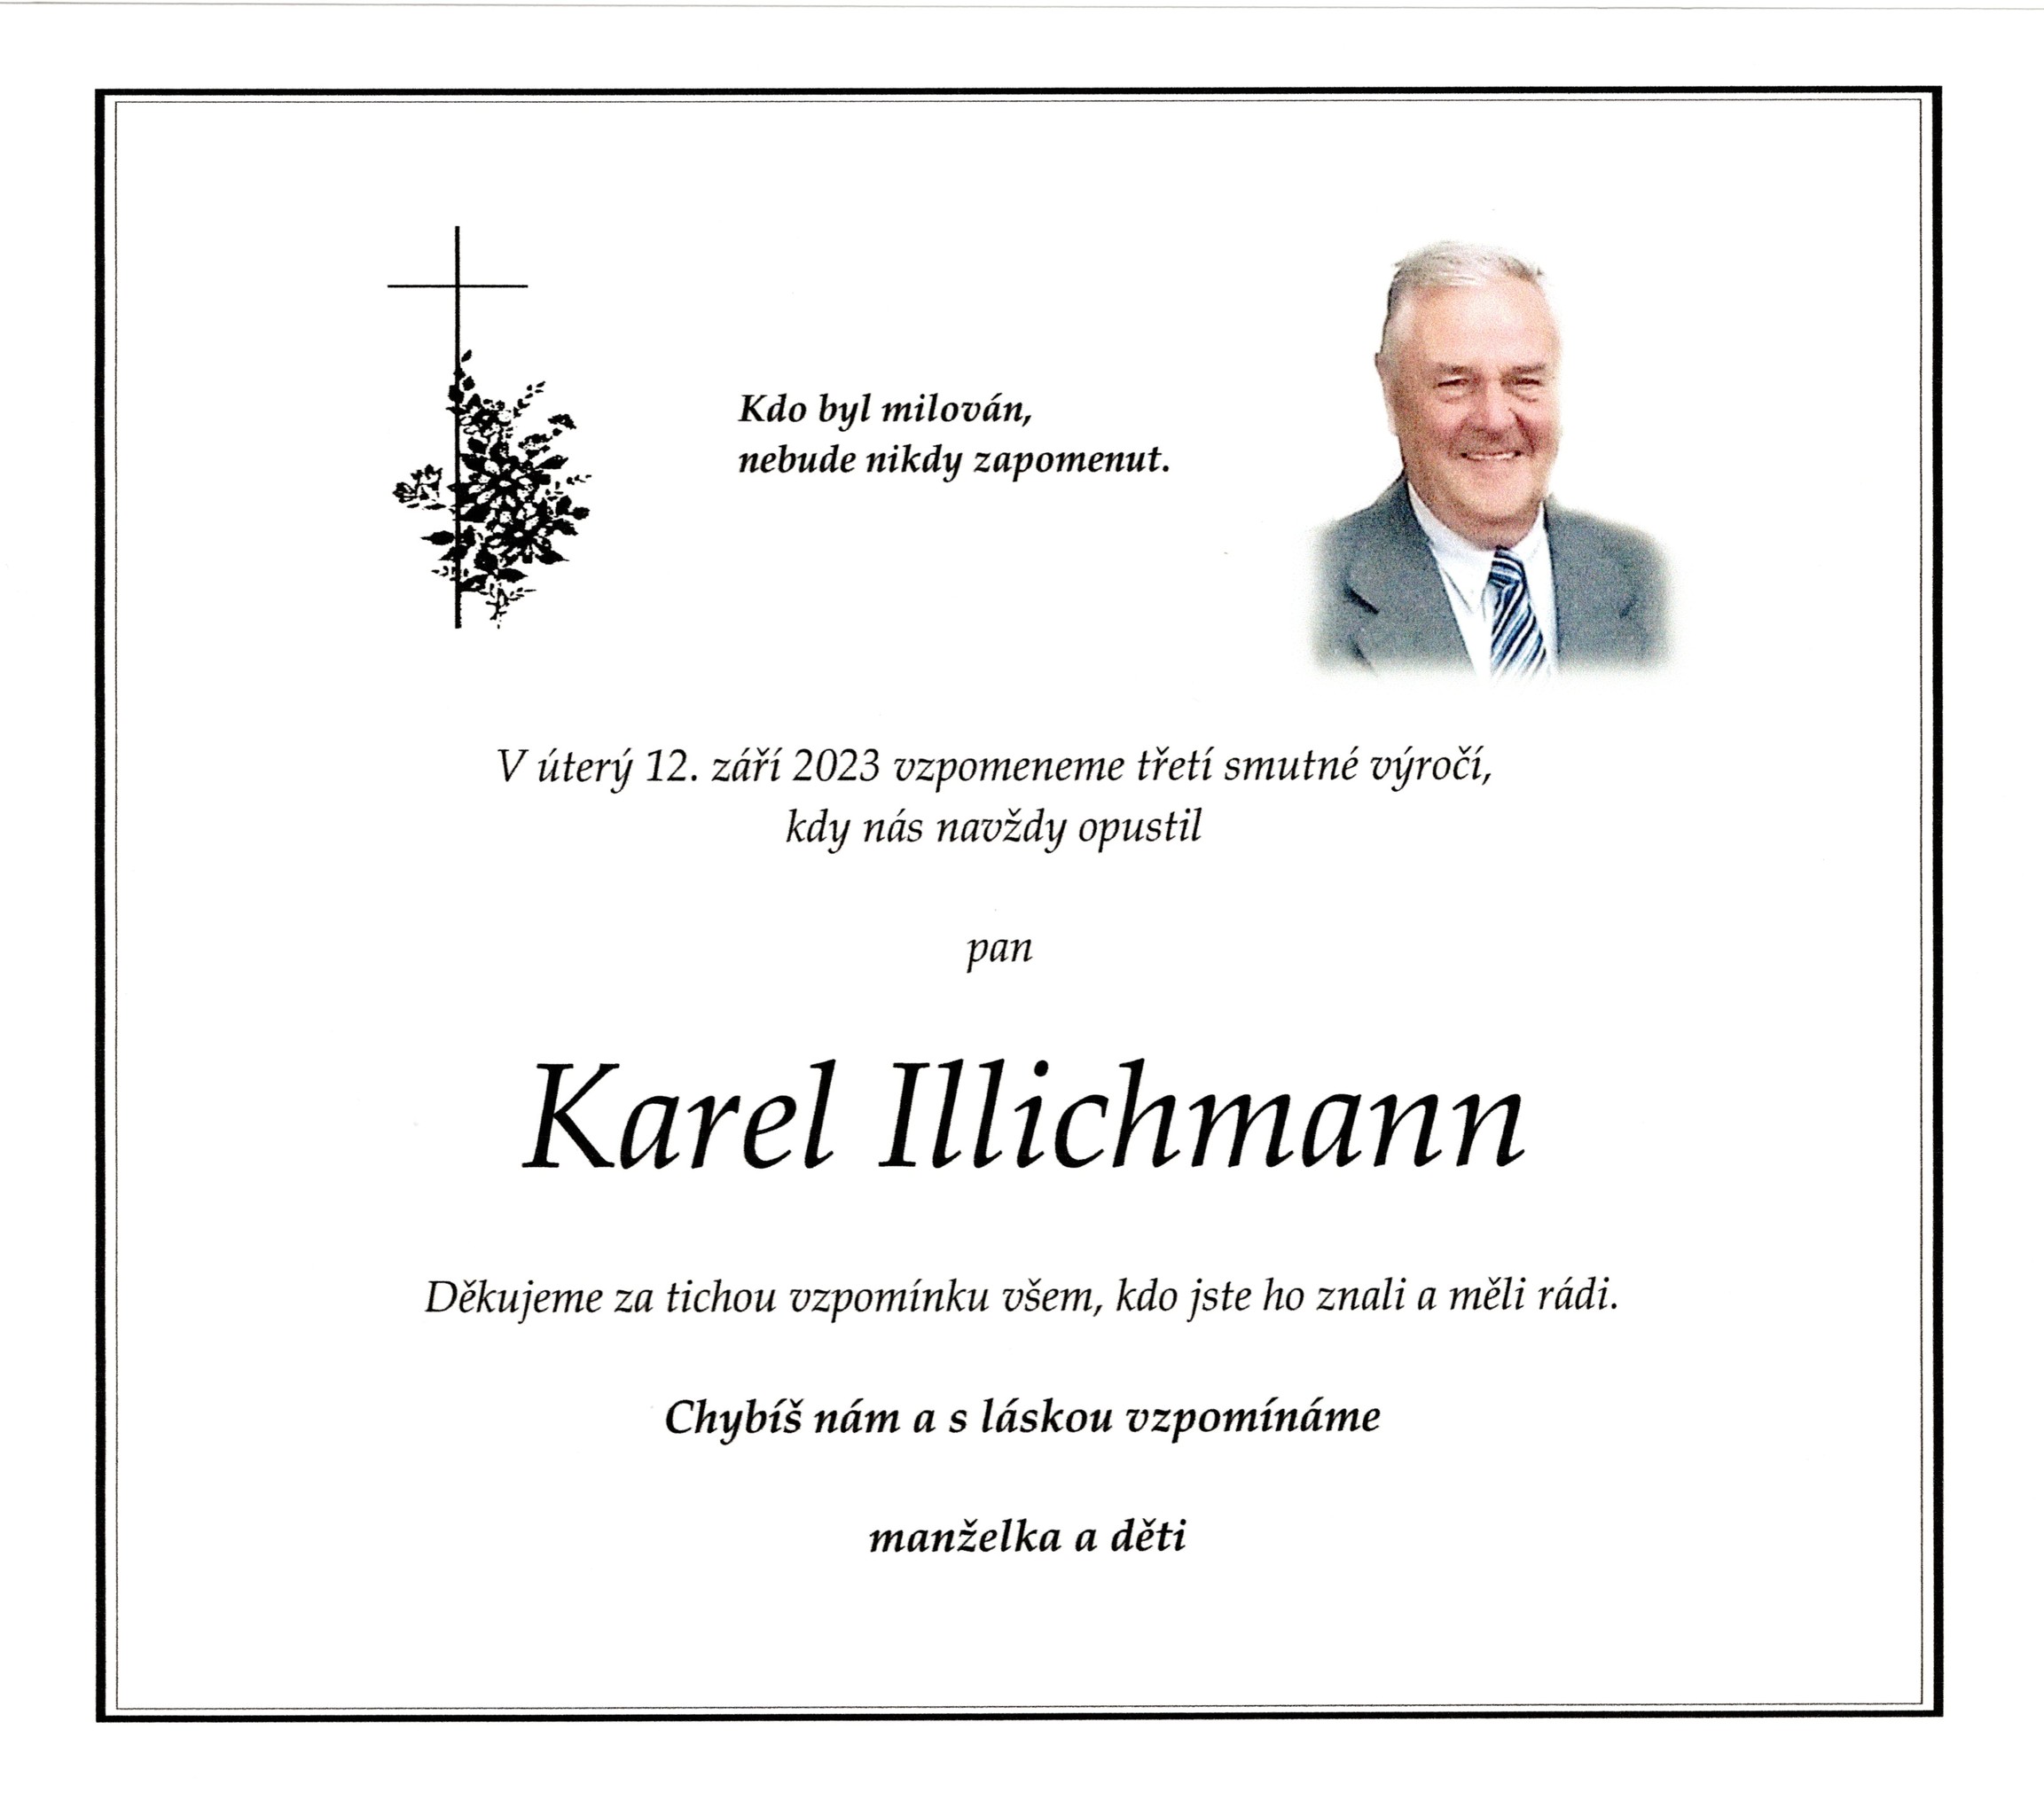 Karel Illichmann